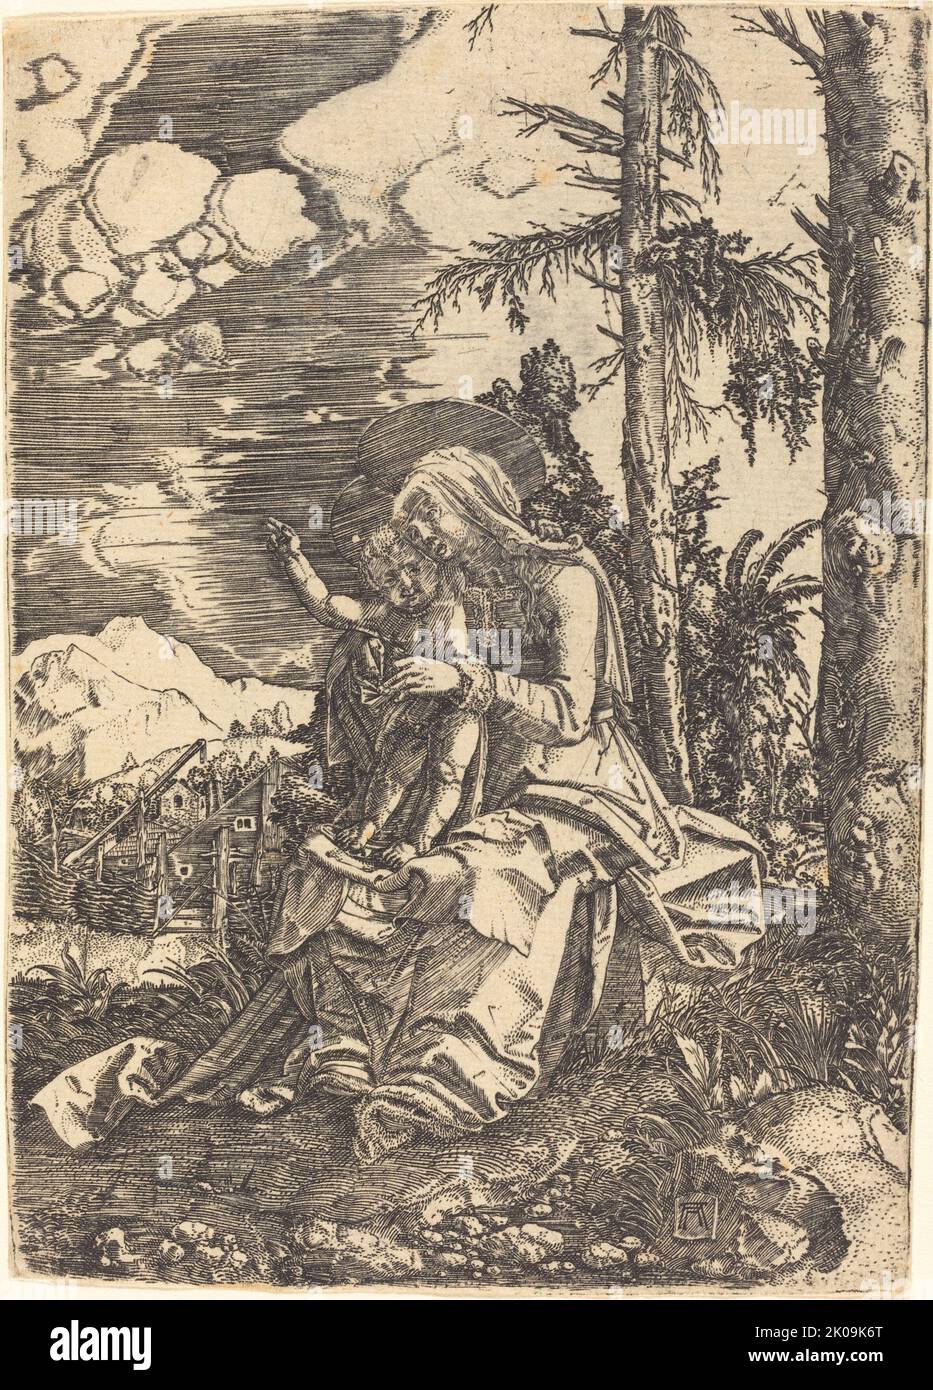 Virgin in a Landscape, c. 1515. Stock Photo